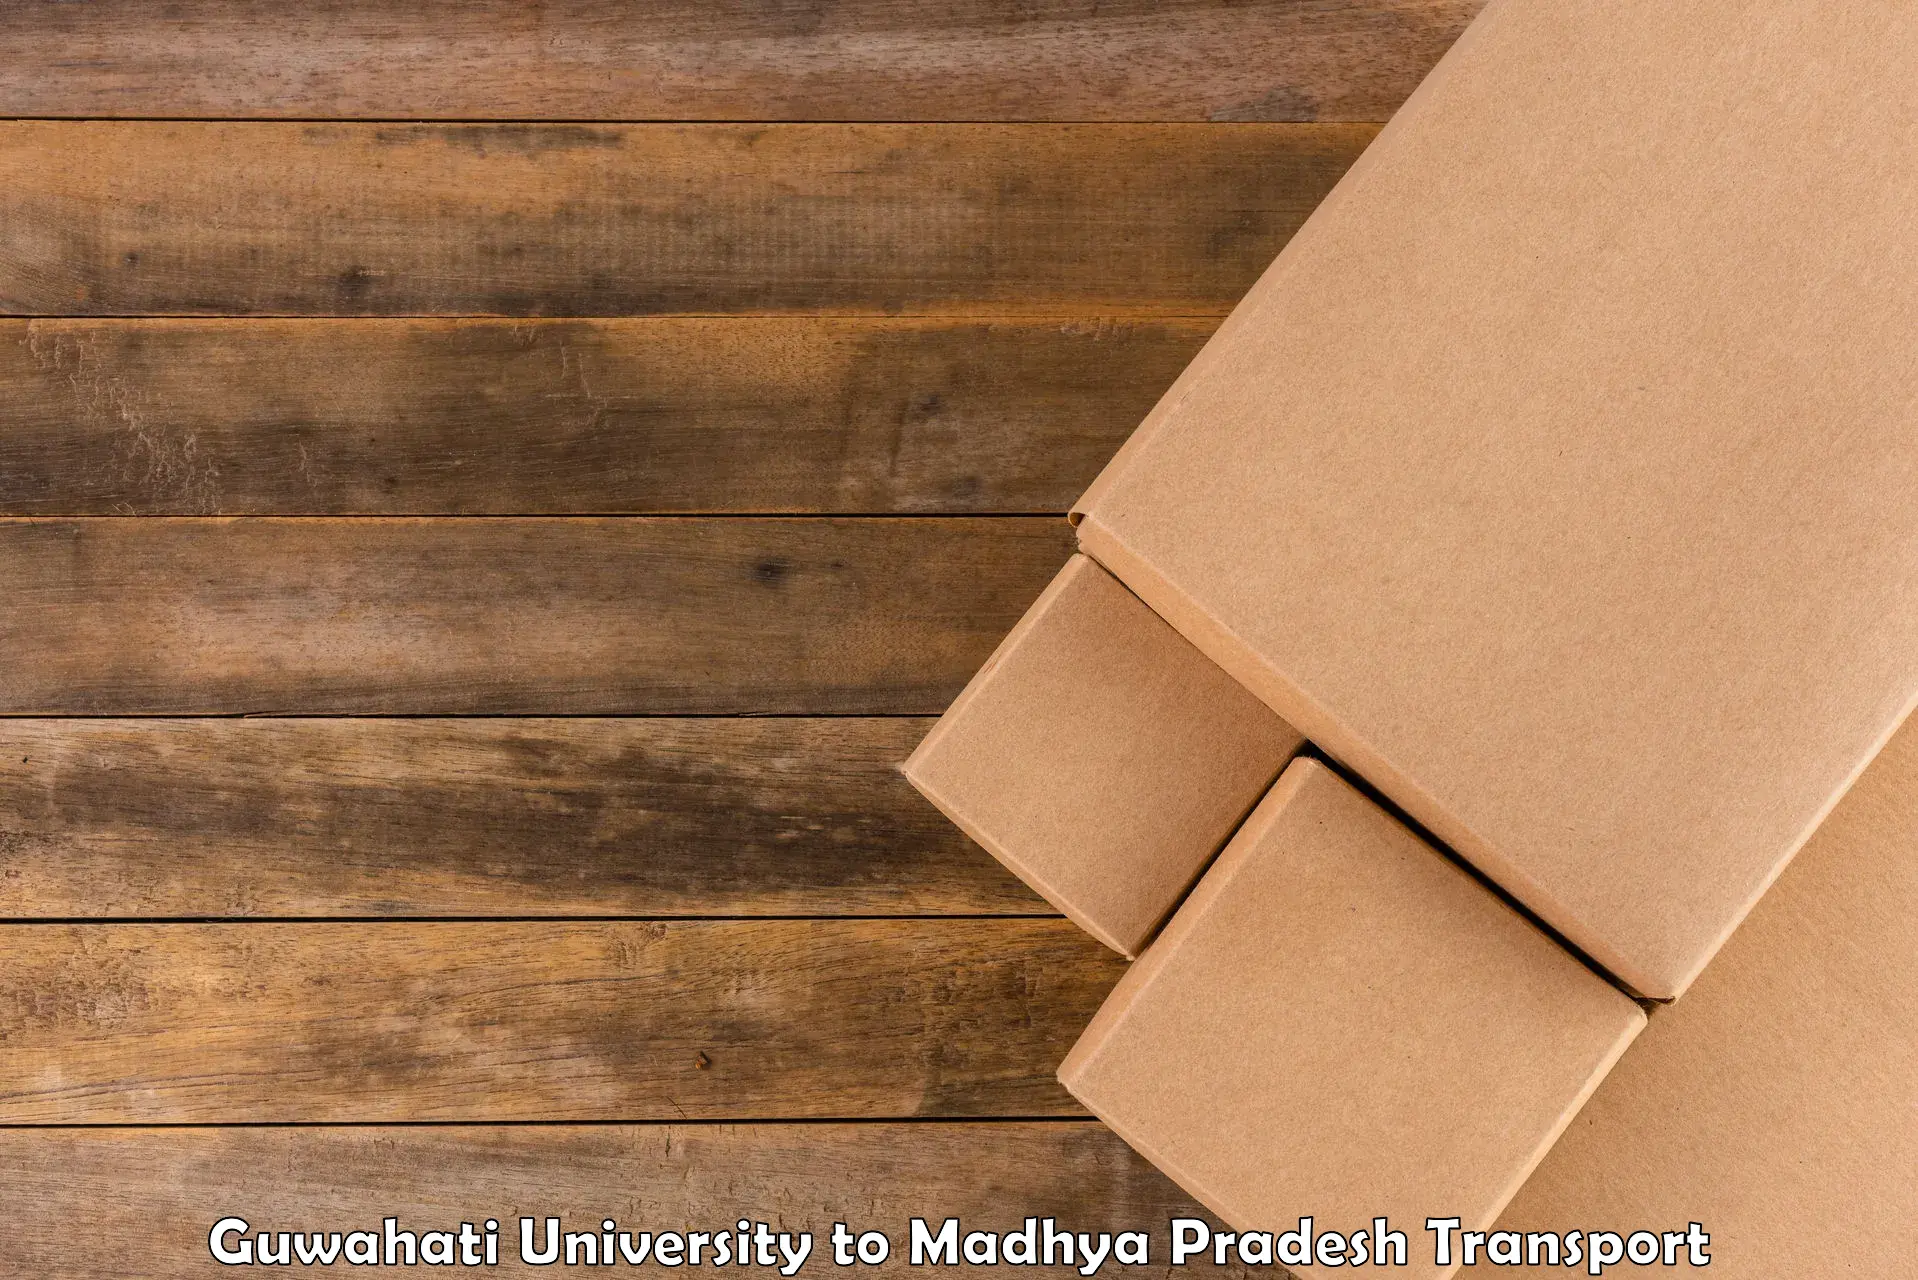 Vehicle parcel service Guwahati University to Indore